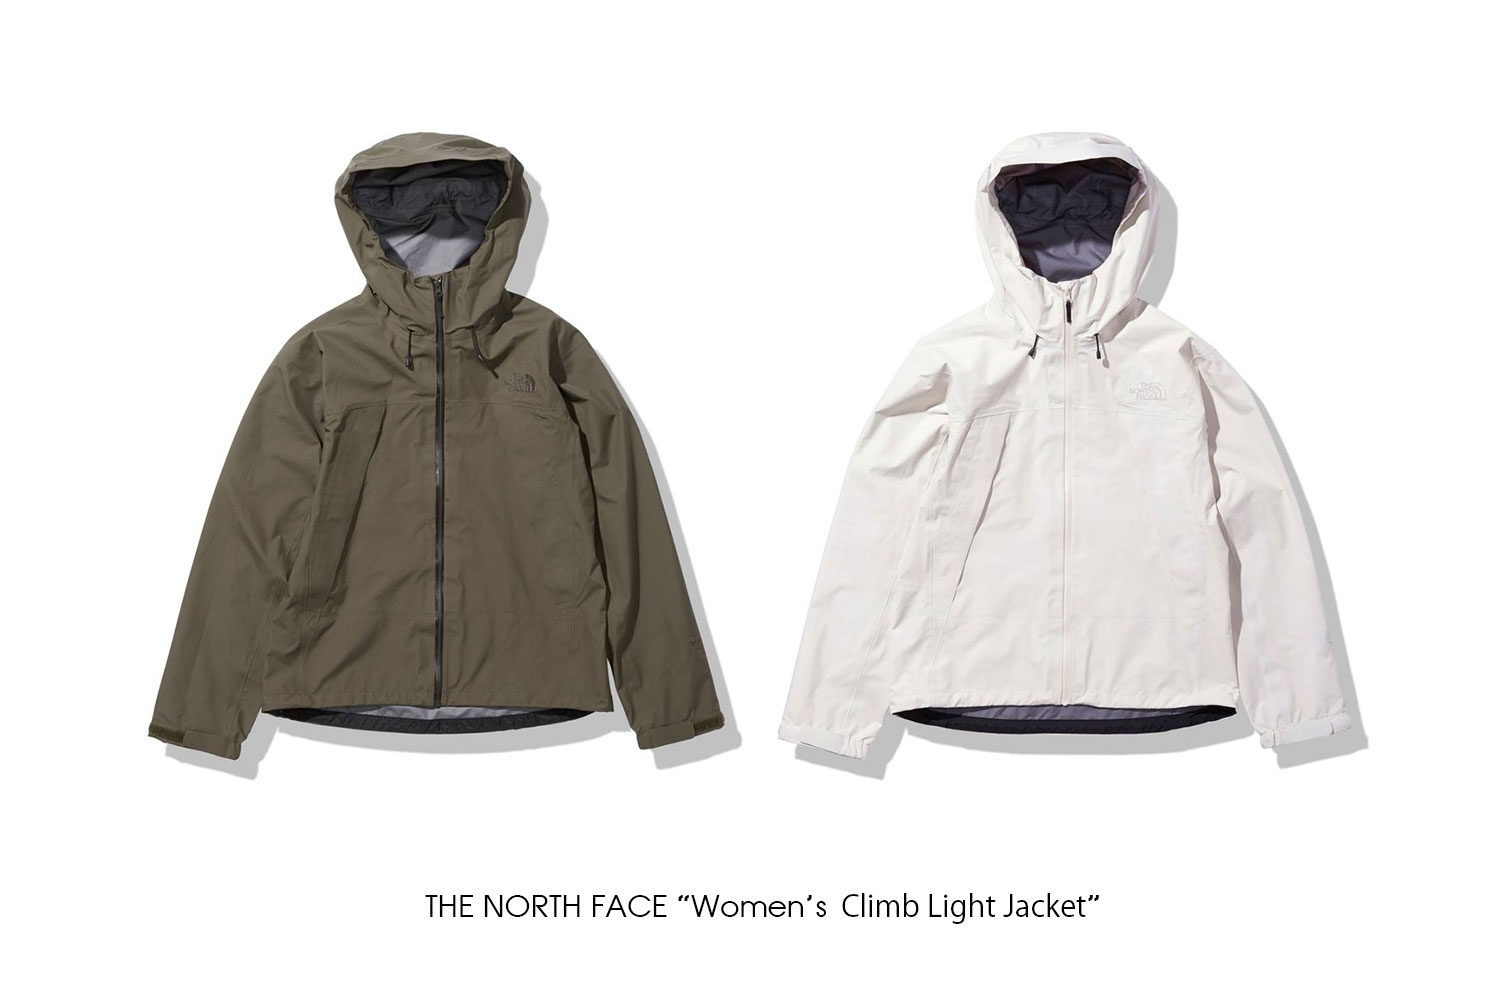 THE NORTH FACE "Women's Climb Light Jacket"